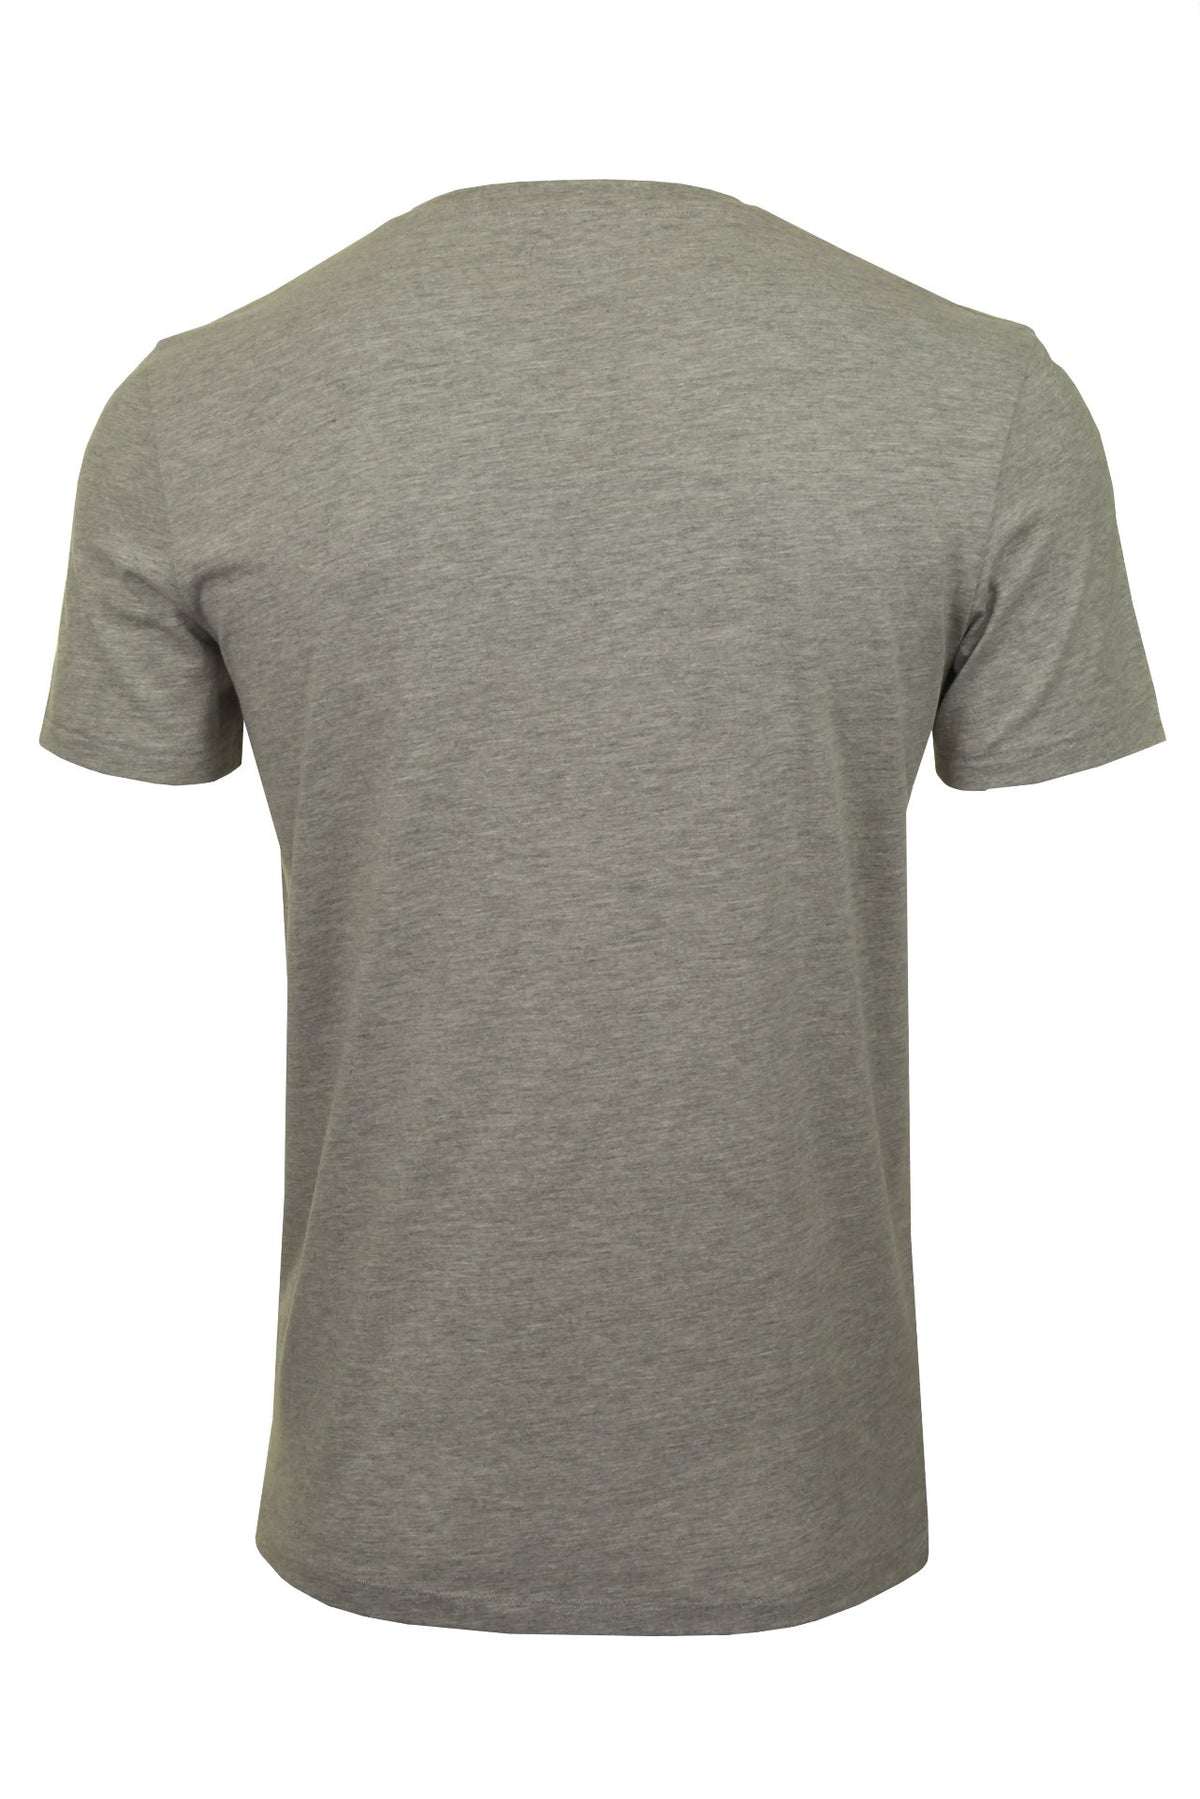 Wrangler Mens T-Shirt 'SS Sign off Tee', 03, W7C07D, Mid Grey Marl